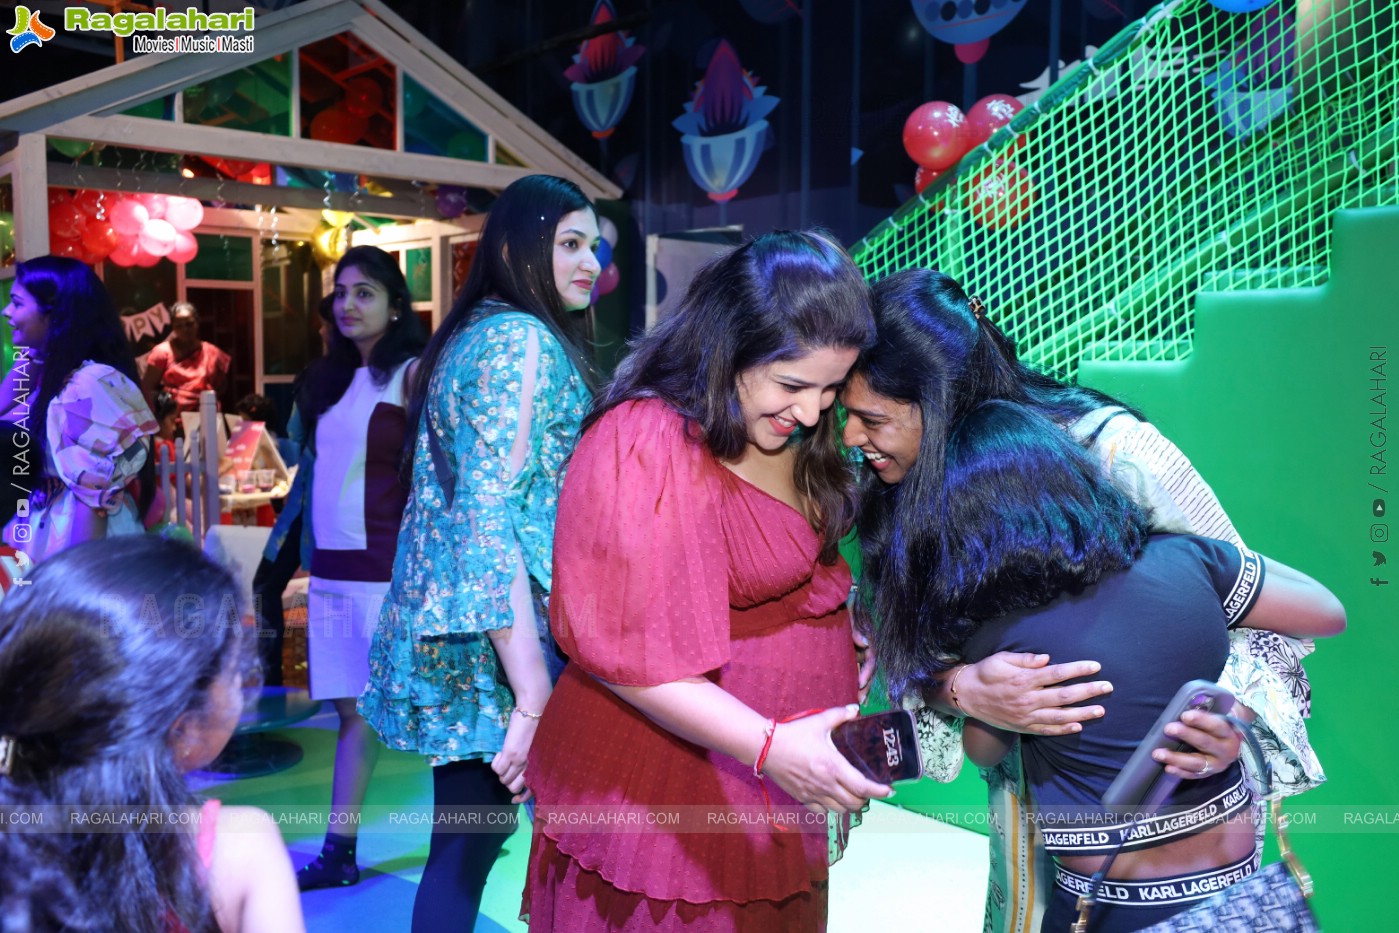 Producer Hanshita Reddy Hosts a Delightful Playdate at Hyderabad’s First Hamleys Play